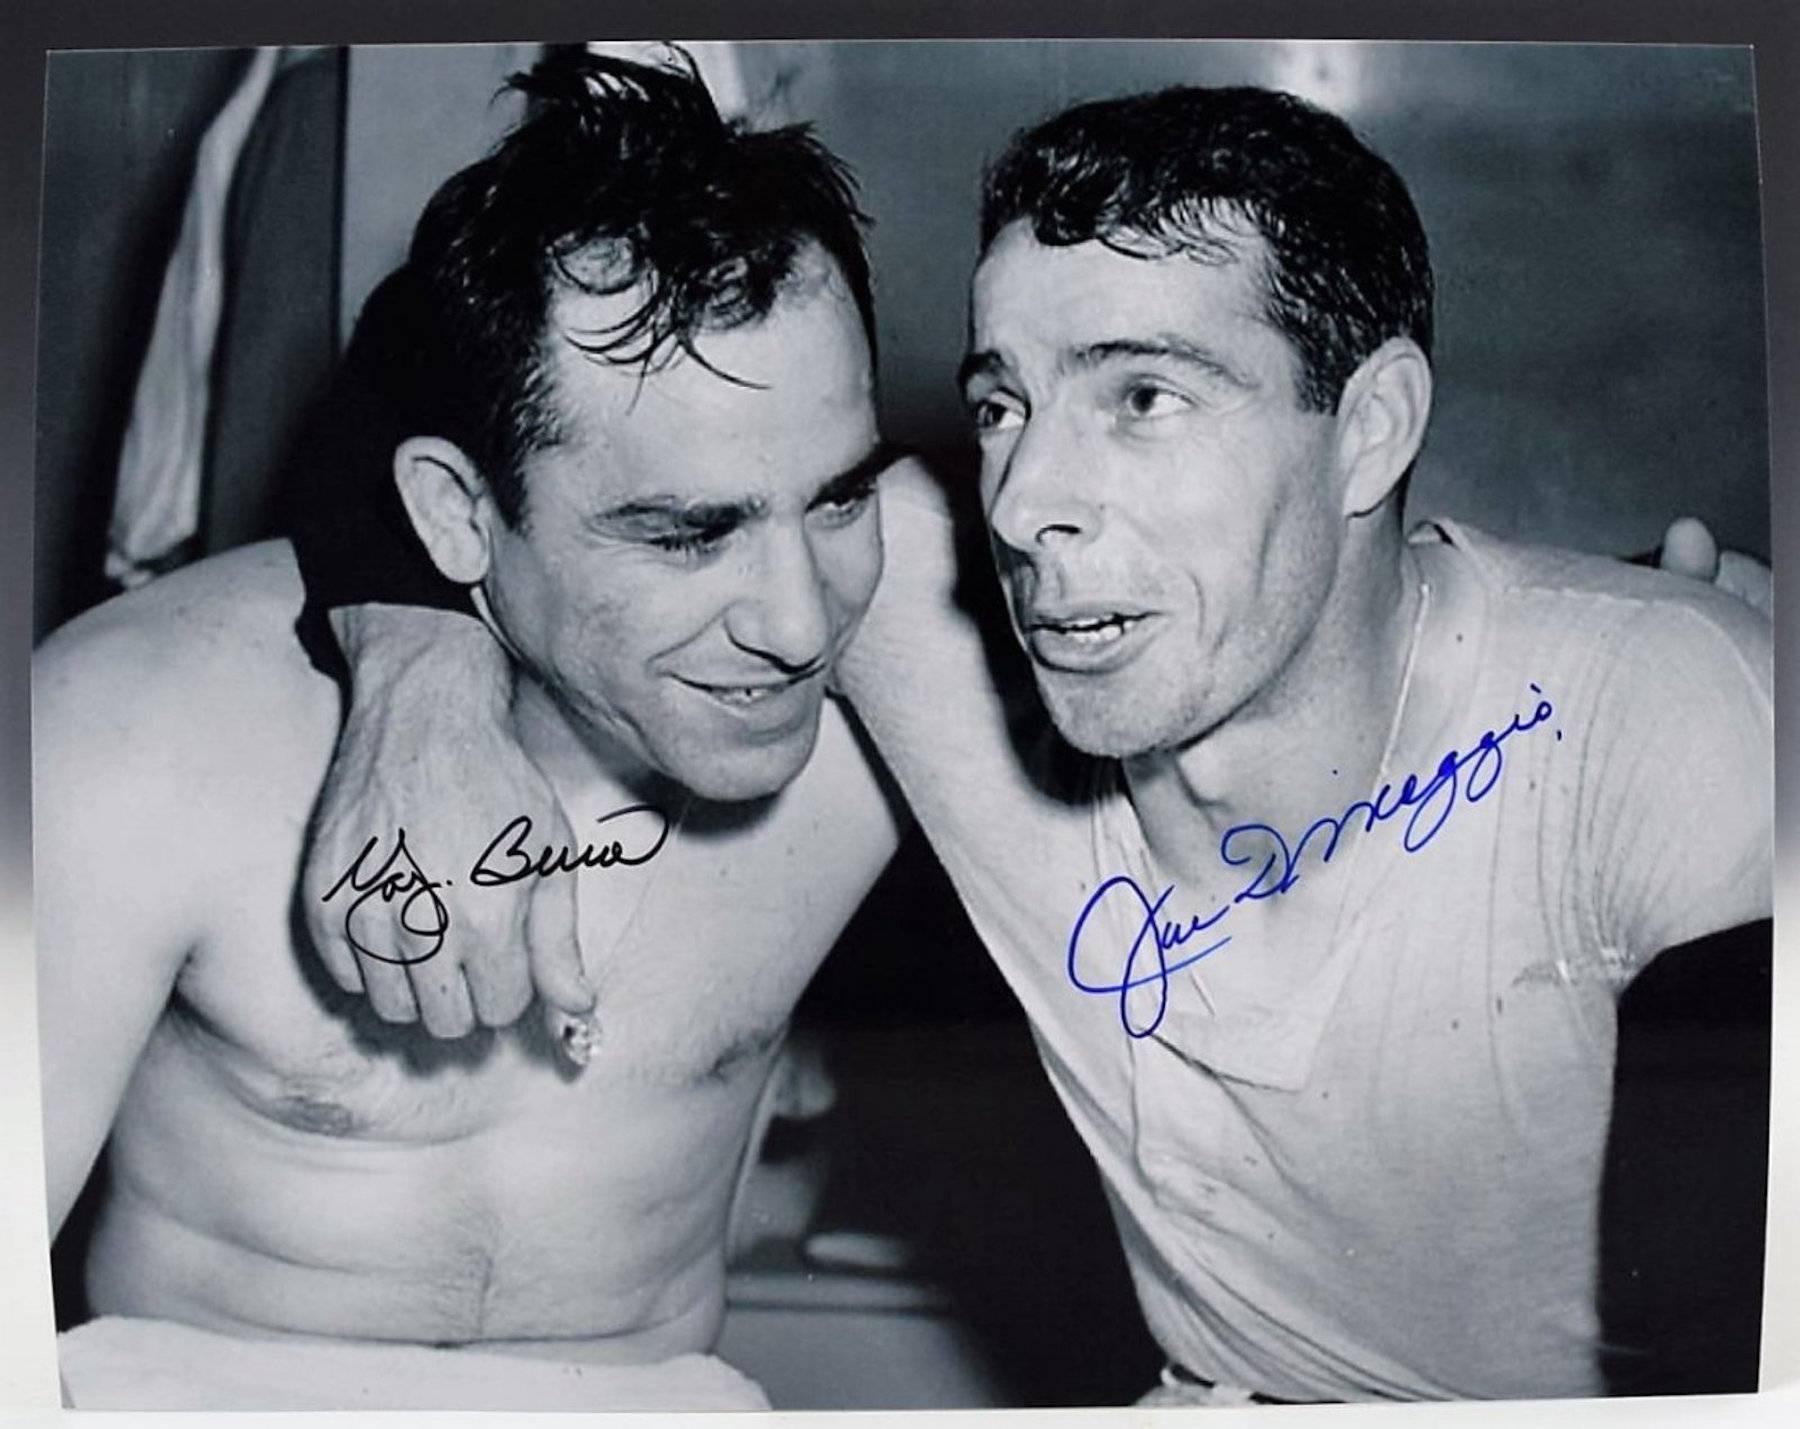 American Autographed Photo of Yogi Berra & Joe DiMaggio